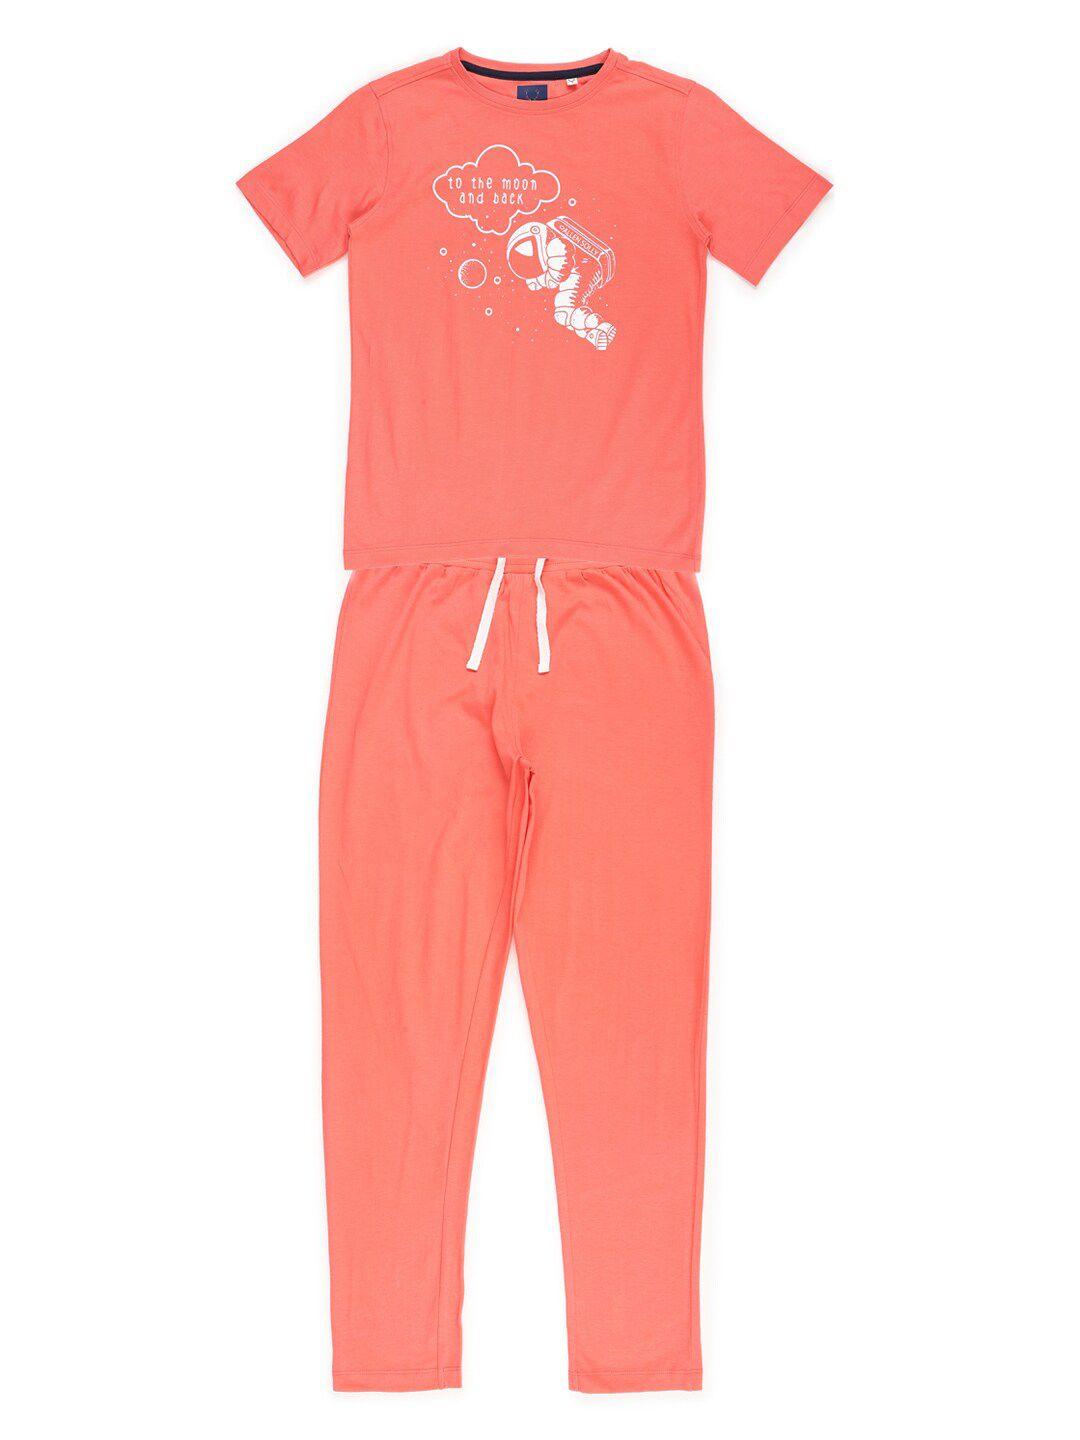 allen solly junior boys peach-coloured printed night suit